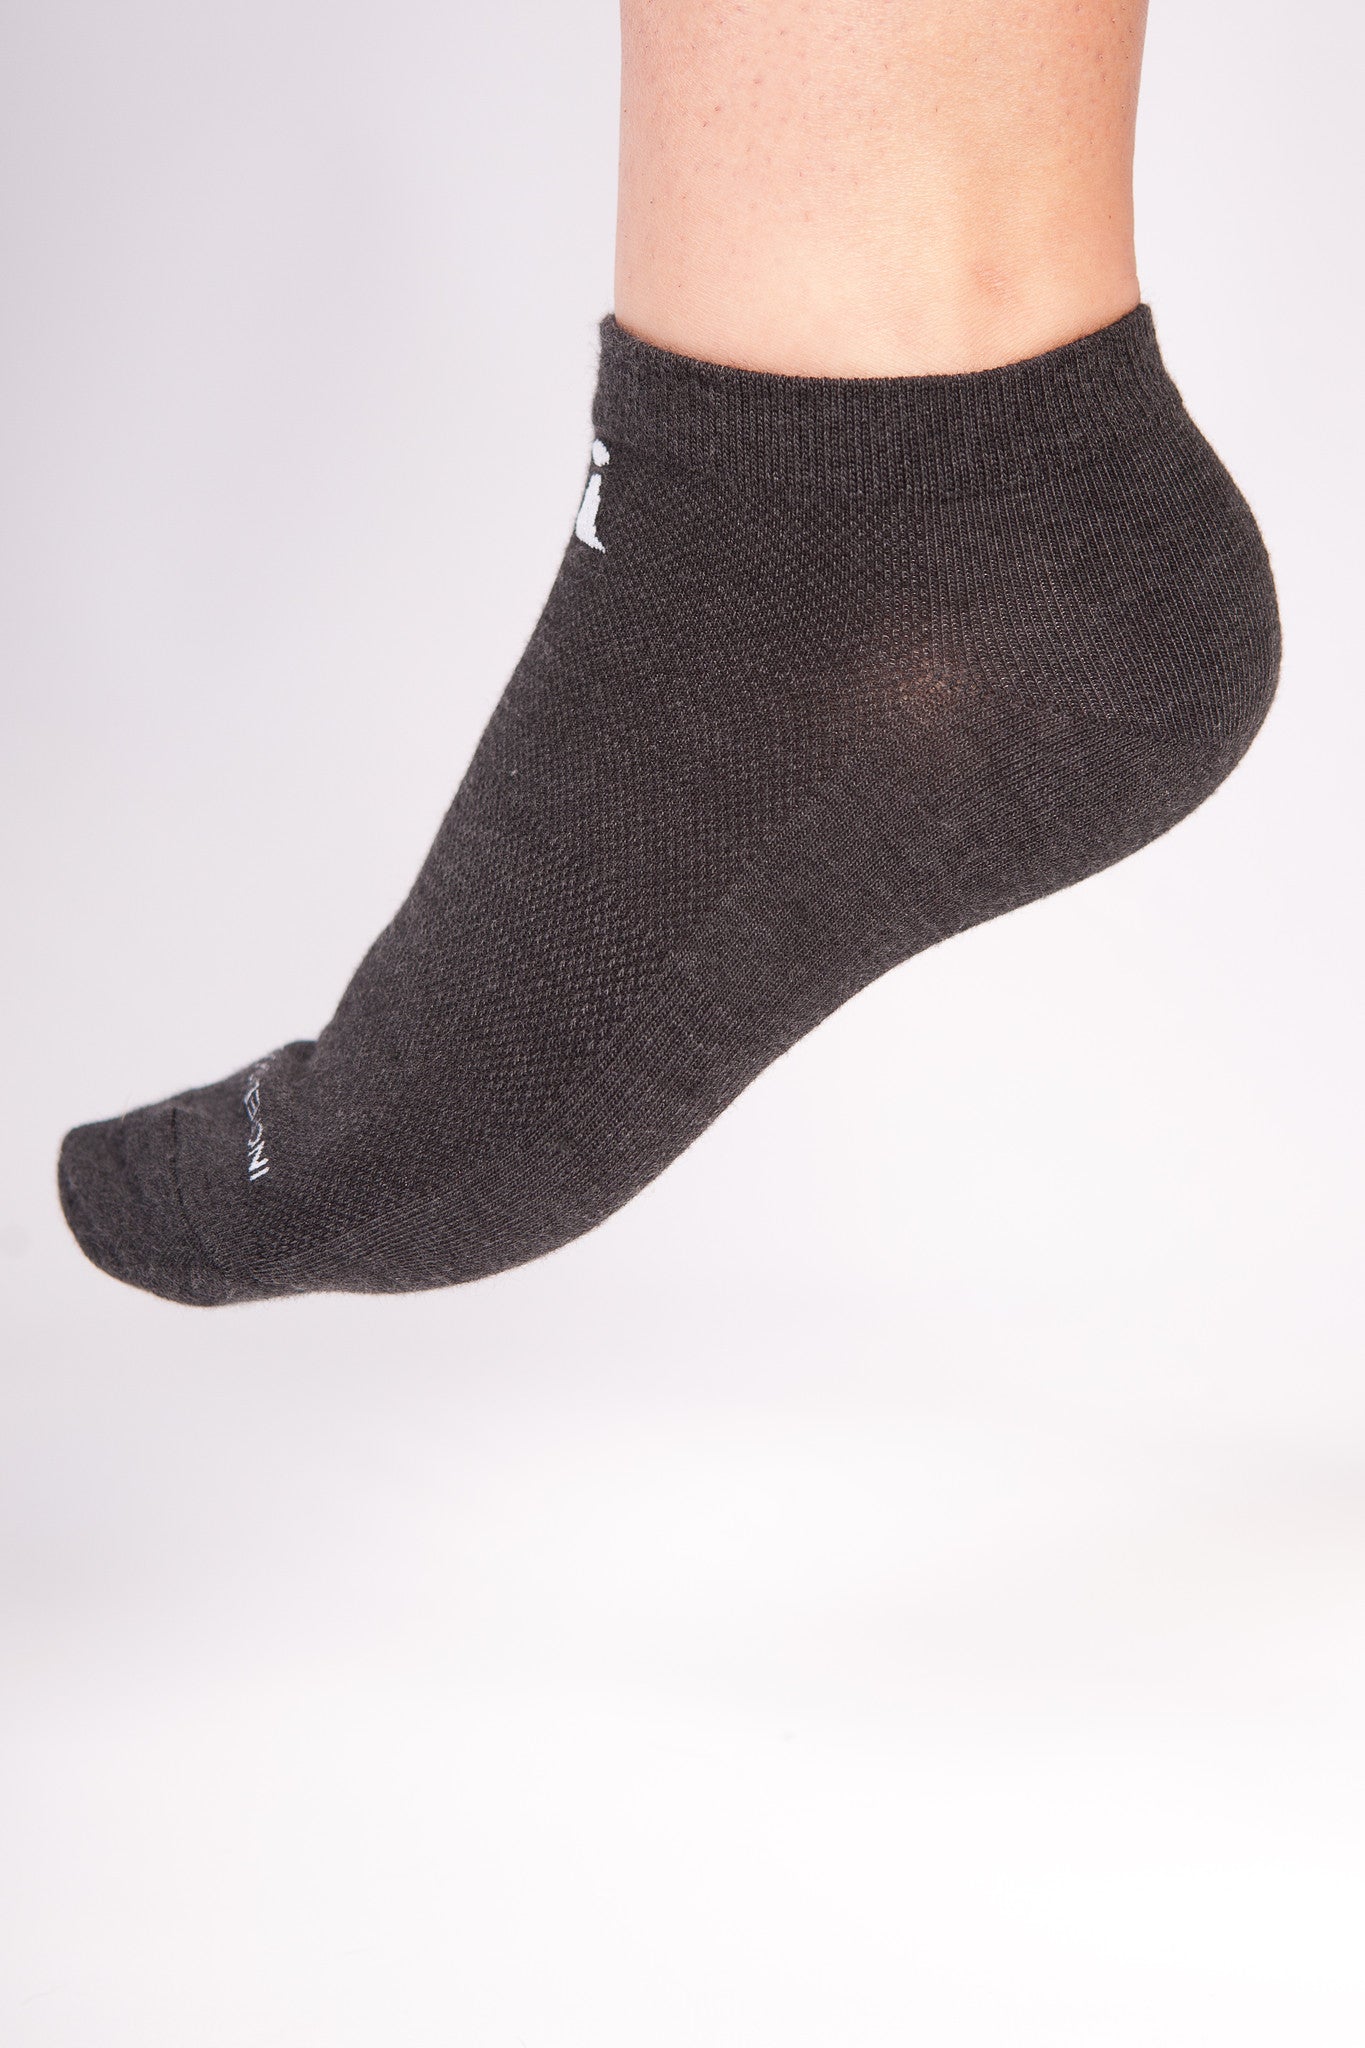 Incrediwear PRO No-Sho Socks by Incrediwear - Ebambu.ca natural health product store - free shipping <59$ 